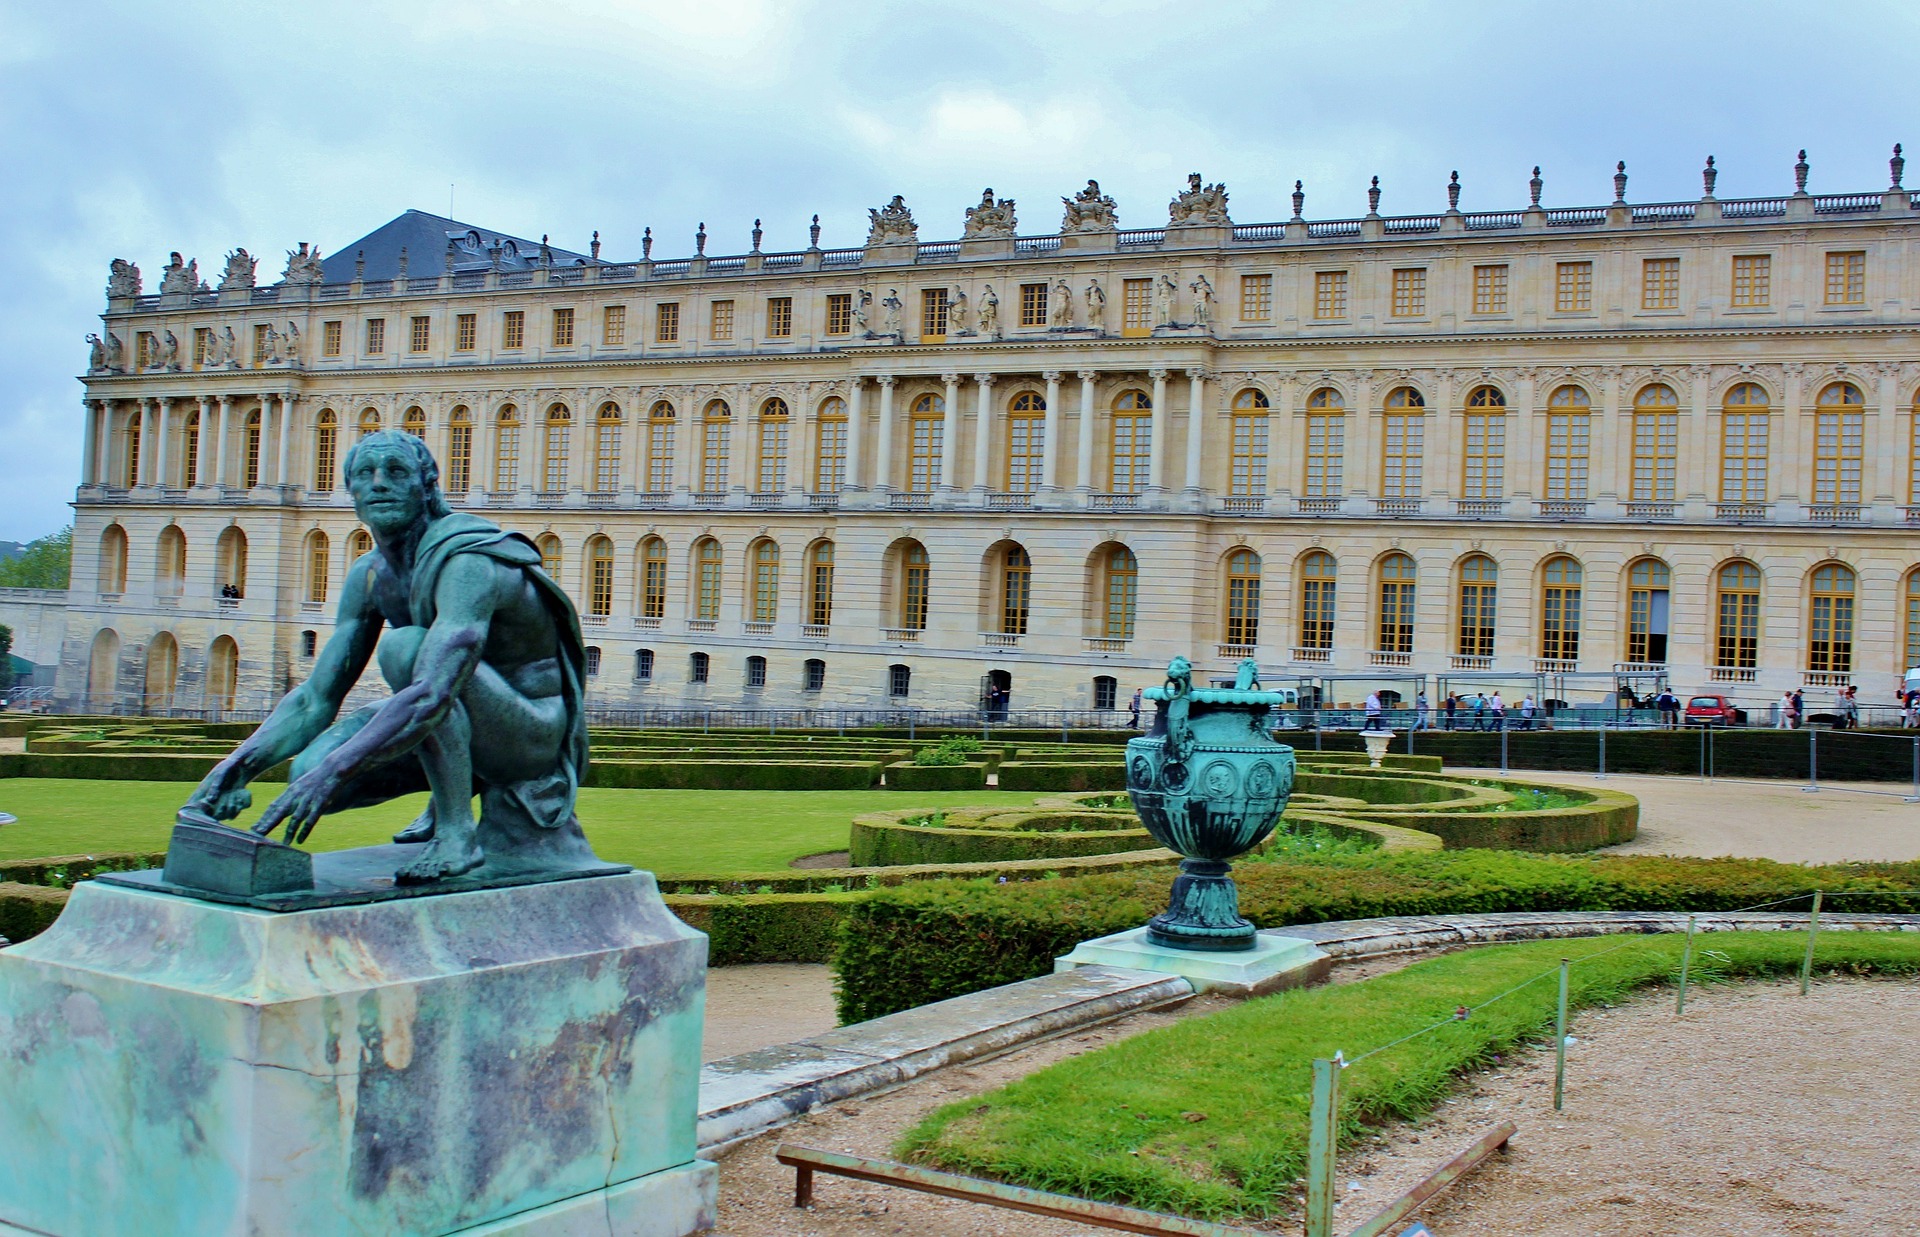 Gardens of Versailles Day Trip from Paris